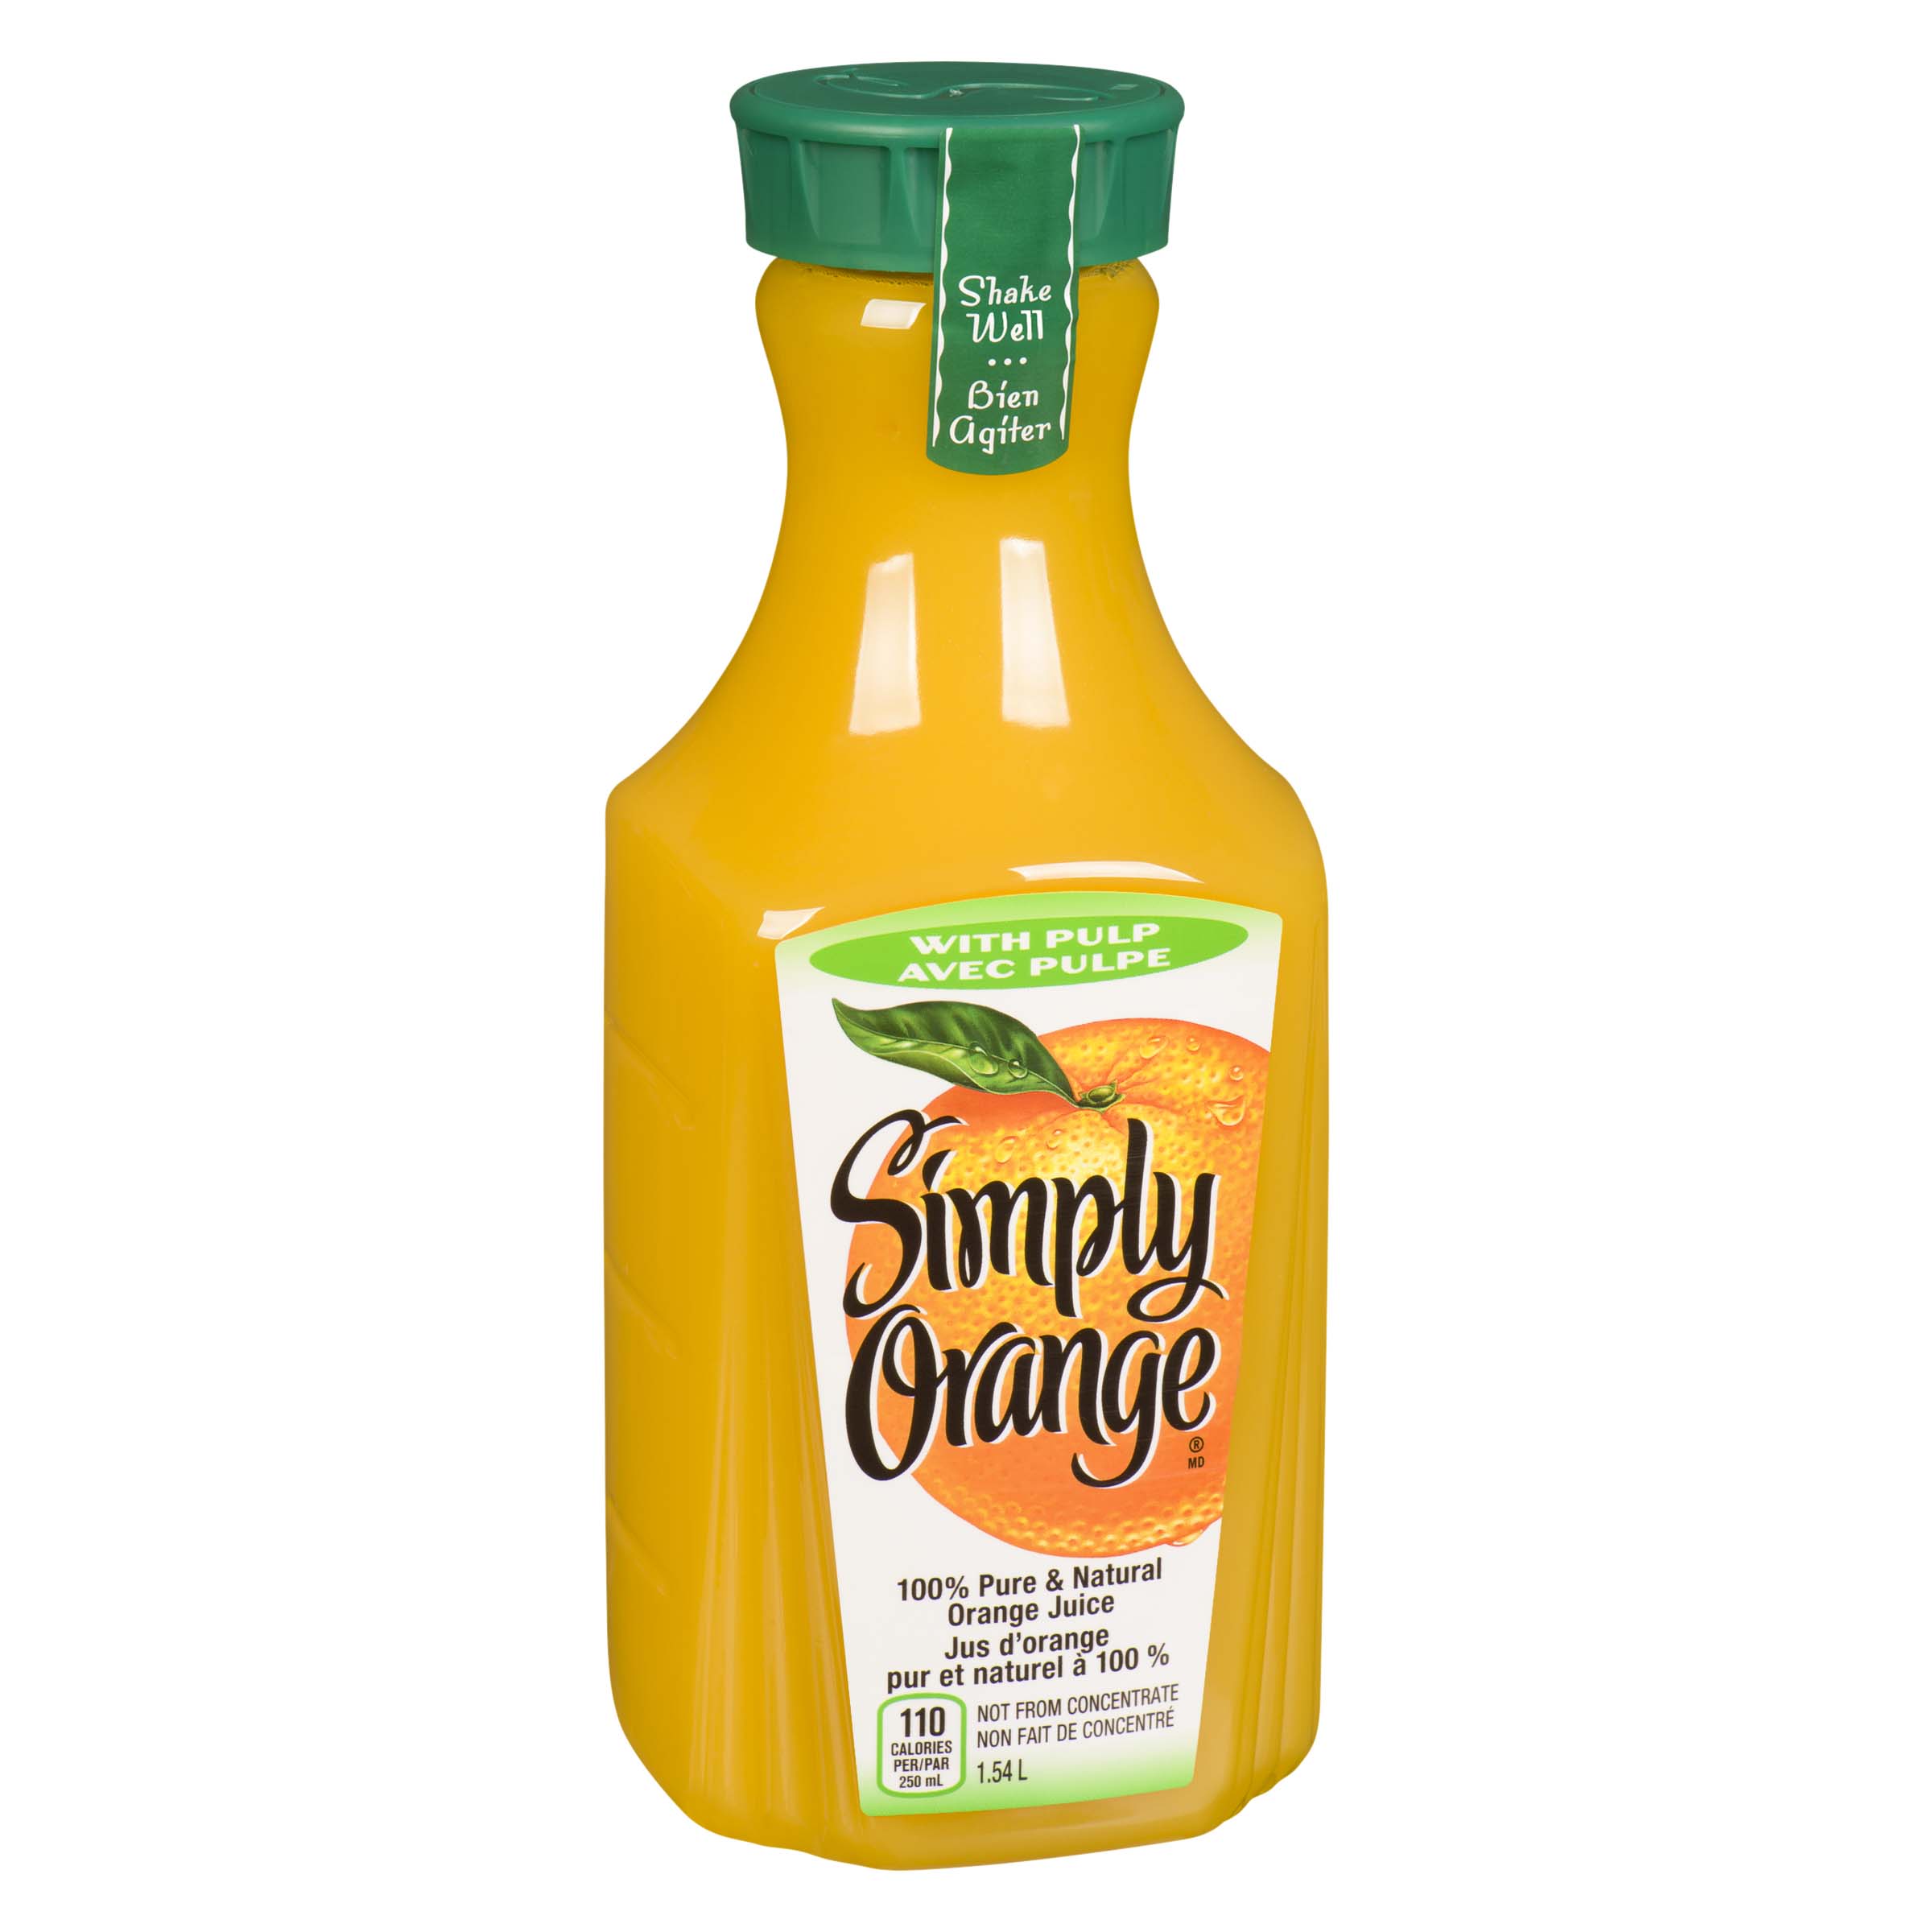 Simply Orange 100 Pure & Natural Orange Juice with Pulp 1.54 L